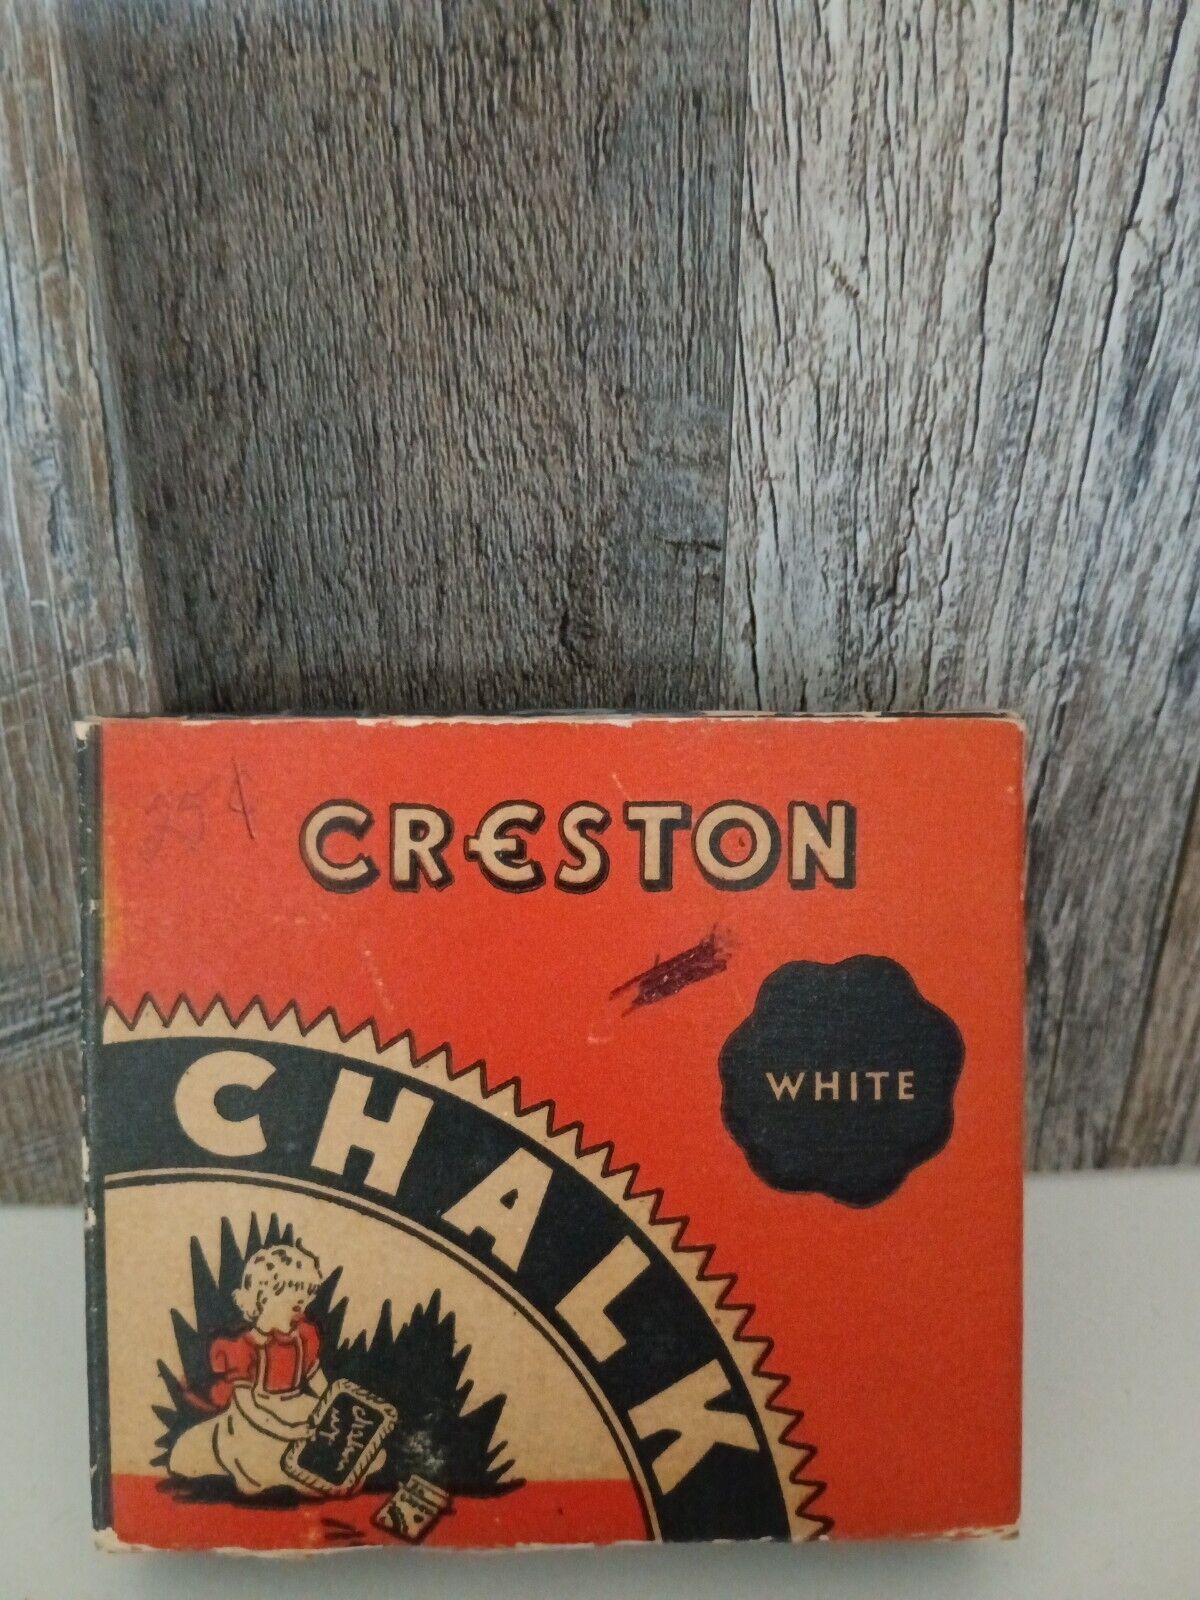 Creston White Chalk Box No. 4318, 12 of 18 Sticks Vintage Retro Graphics A-18